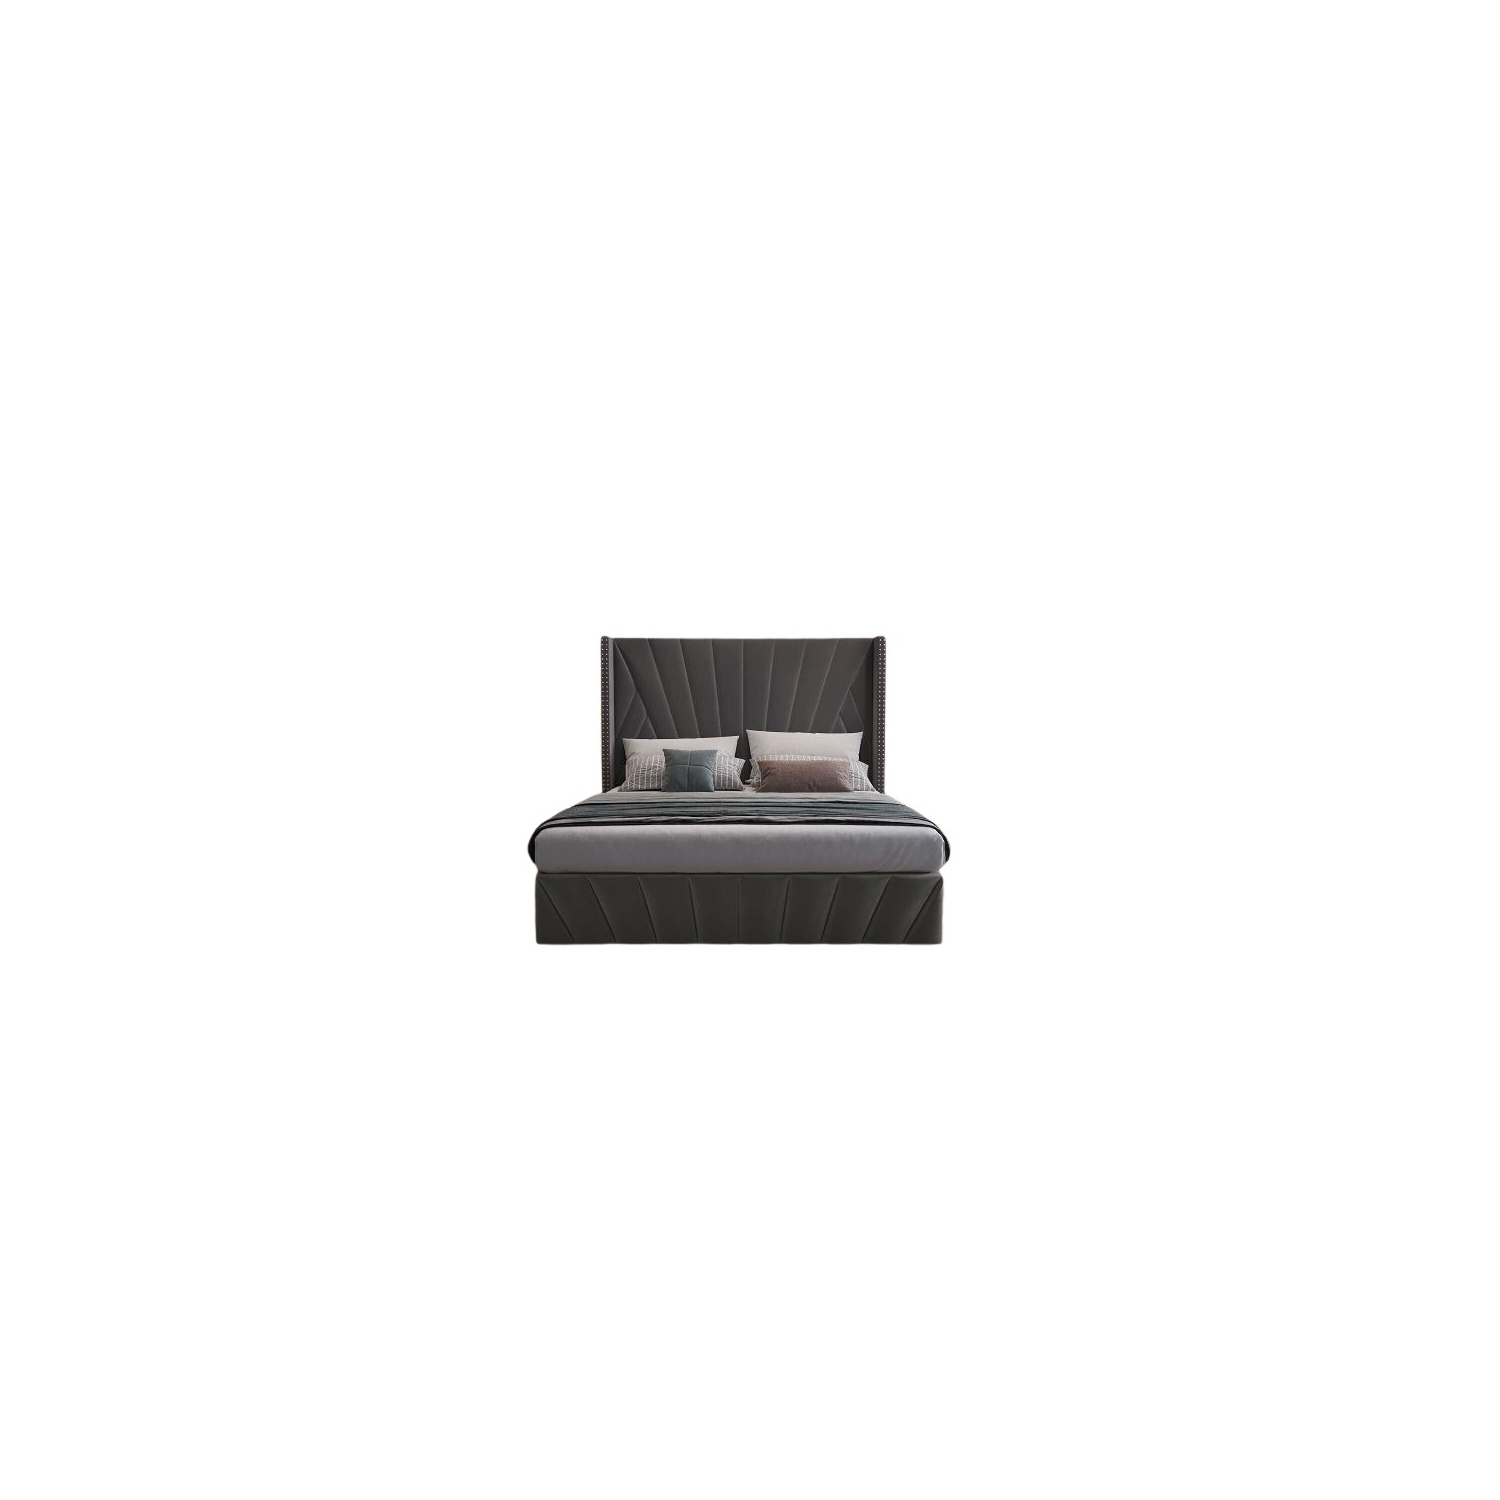 Aykah Size Velvet Upholstered Tufted Bed, Fabric, Low Profile Platform, Metal Bed Frame with High Headboard, Wood Slat Support, Modern Design, Mattress Size (Grey, King)